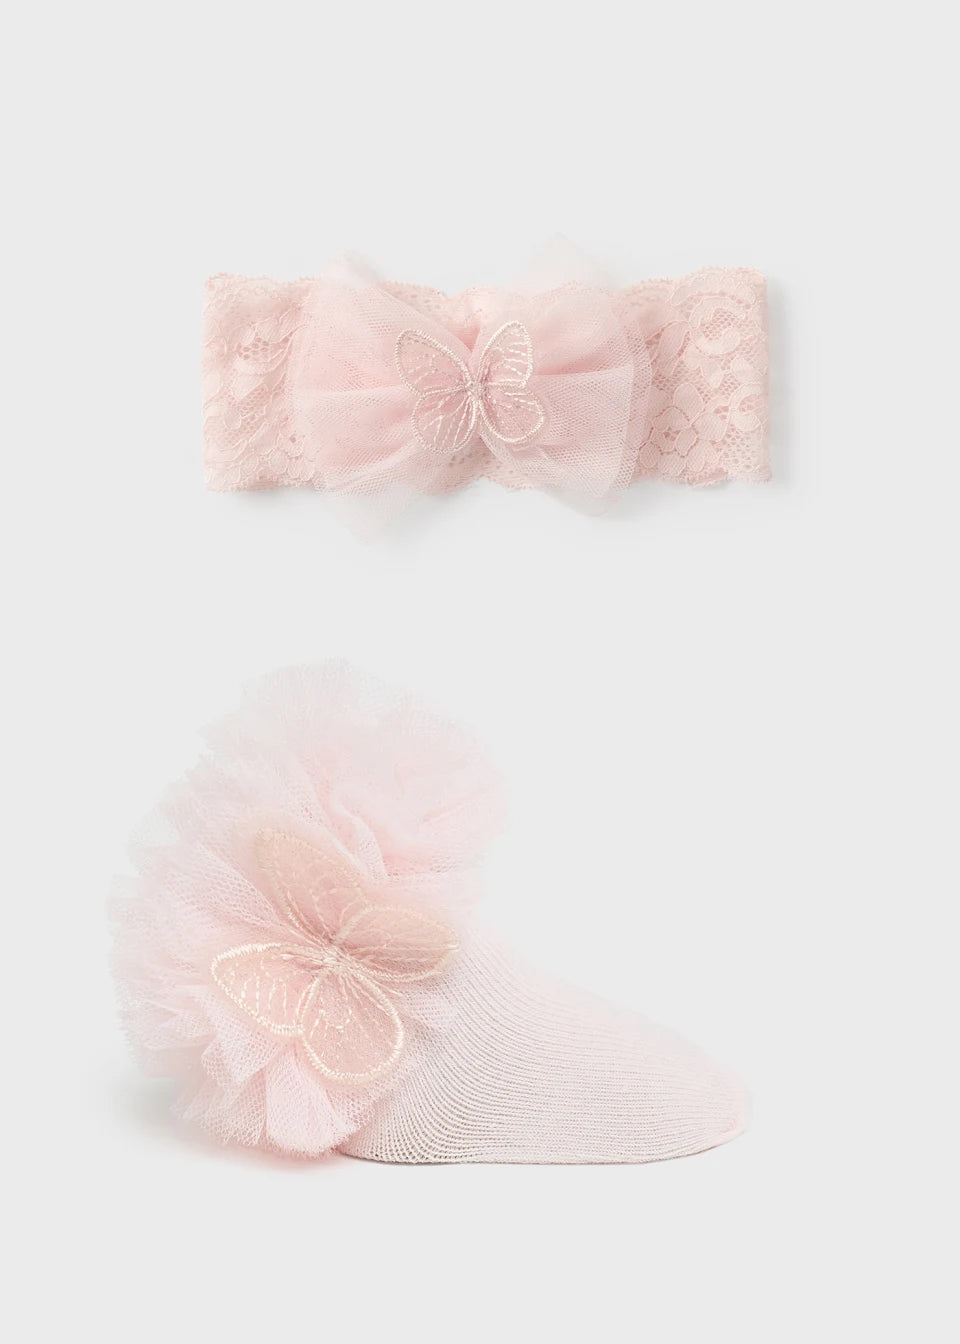 Organic cotton pink bow socks and headband set for baby girl.